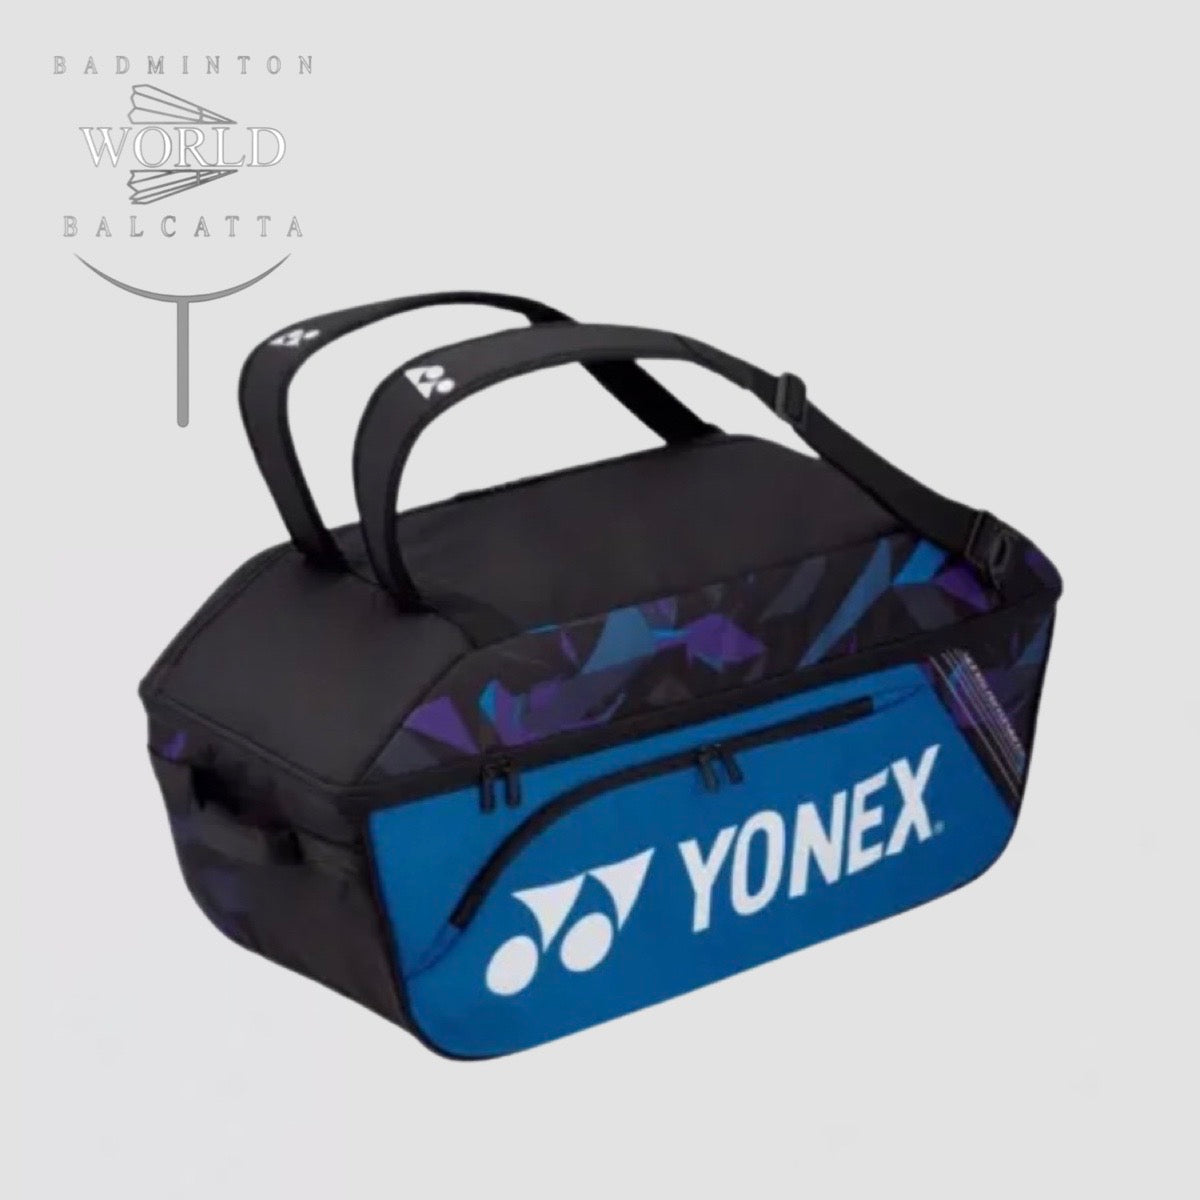 Yonex Pro Osaka x 6 Tennis Bag - Gold/Purple